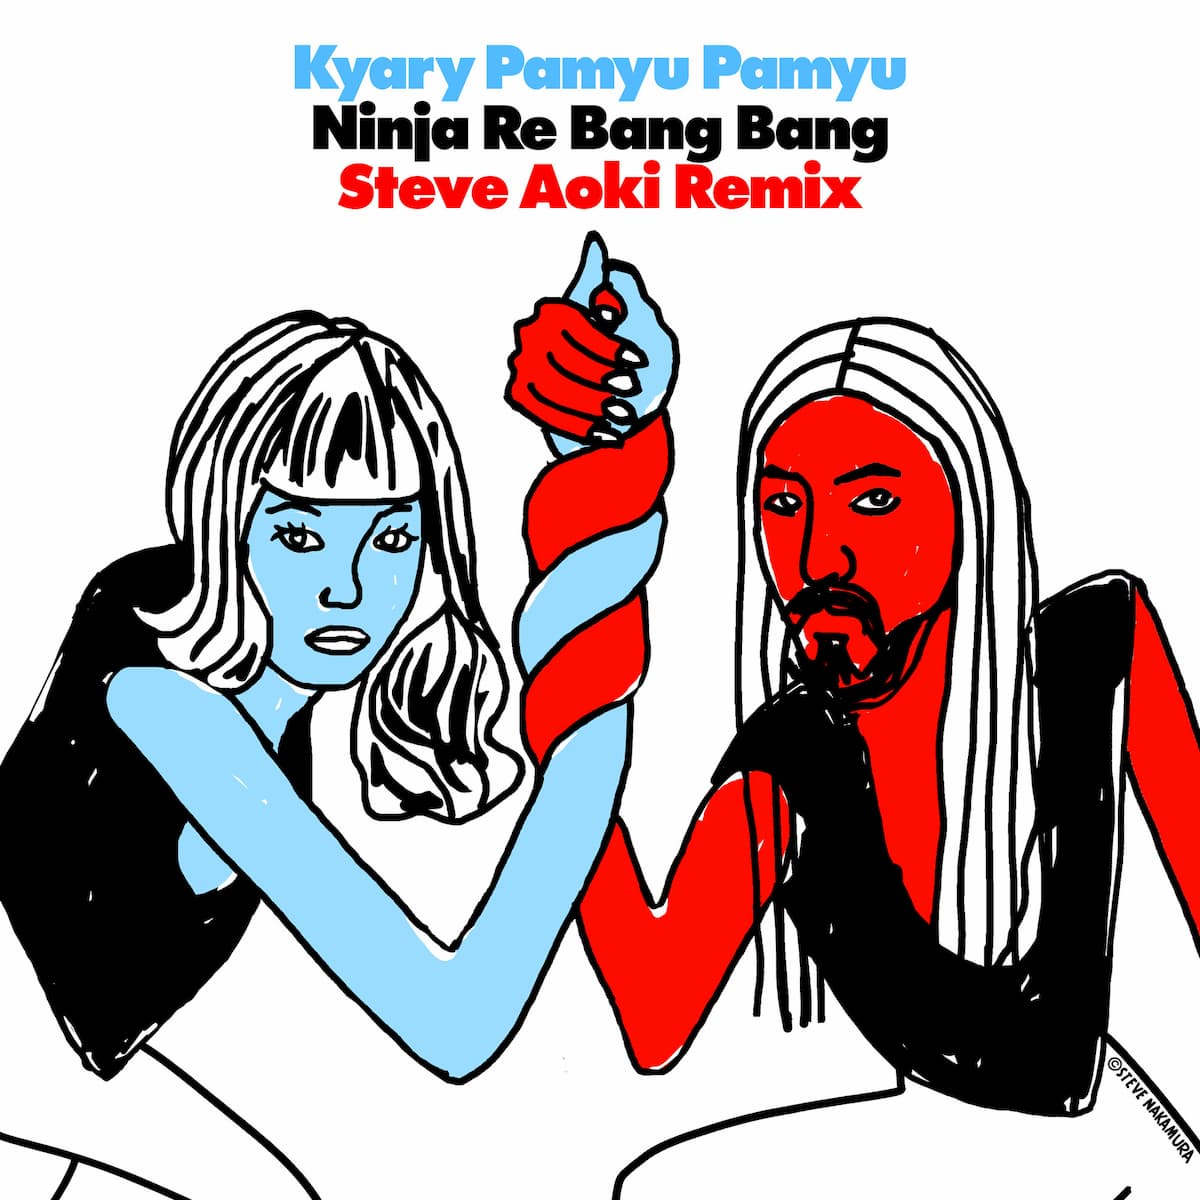 Ninja Re Bang Bang Steve Aoki Remix